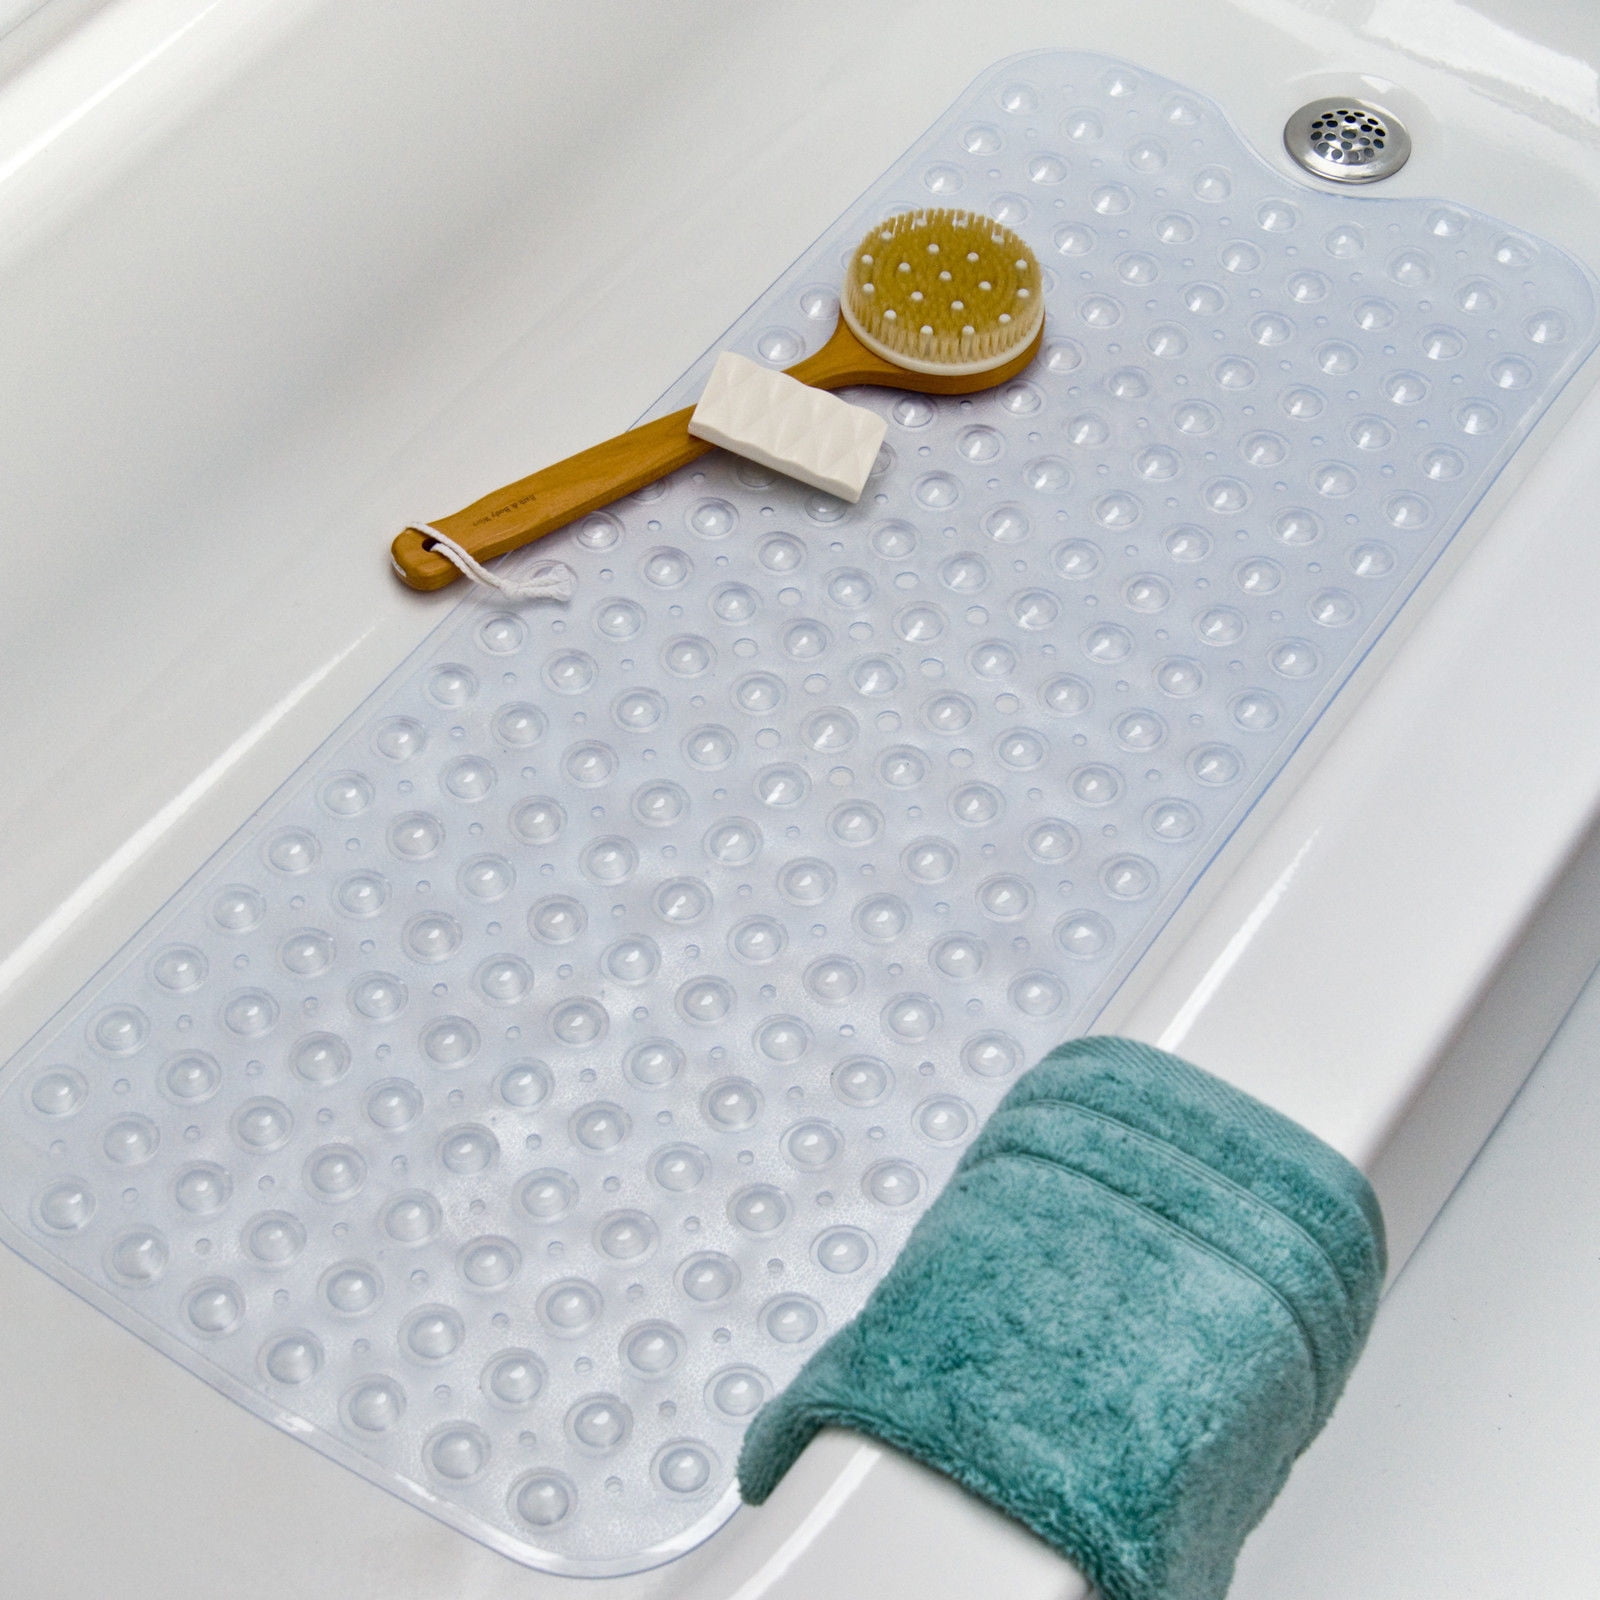 Non Slip Bath Tub Mat Anti Slip Extra Comfy Shower Square Mat Pad 